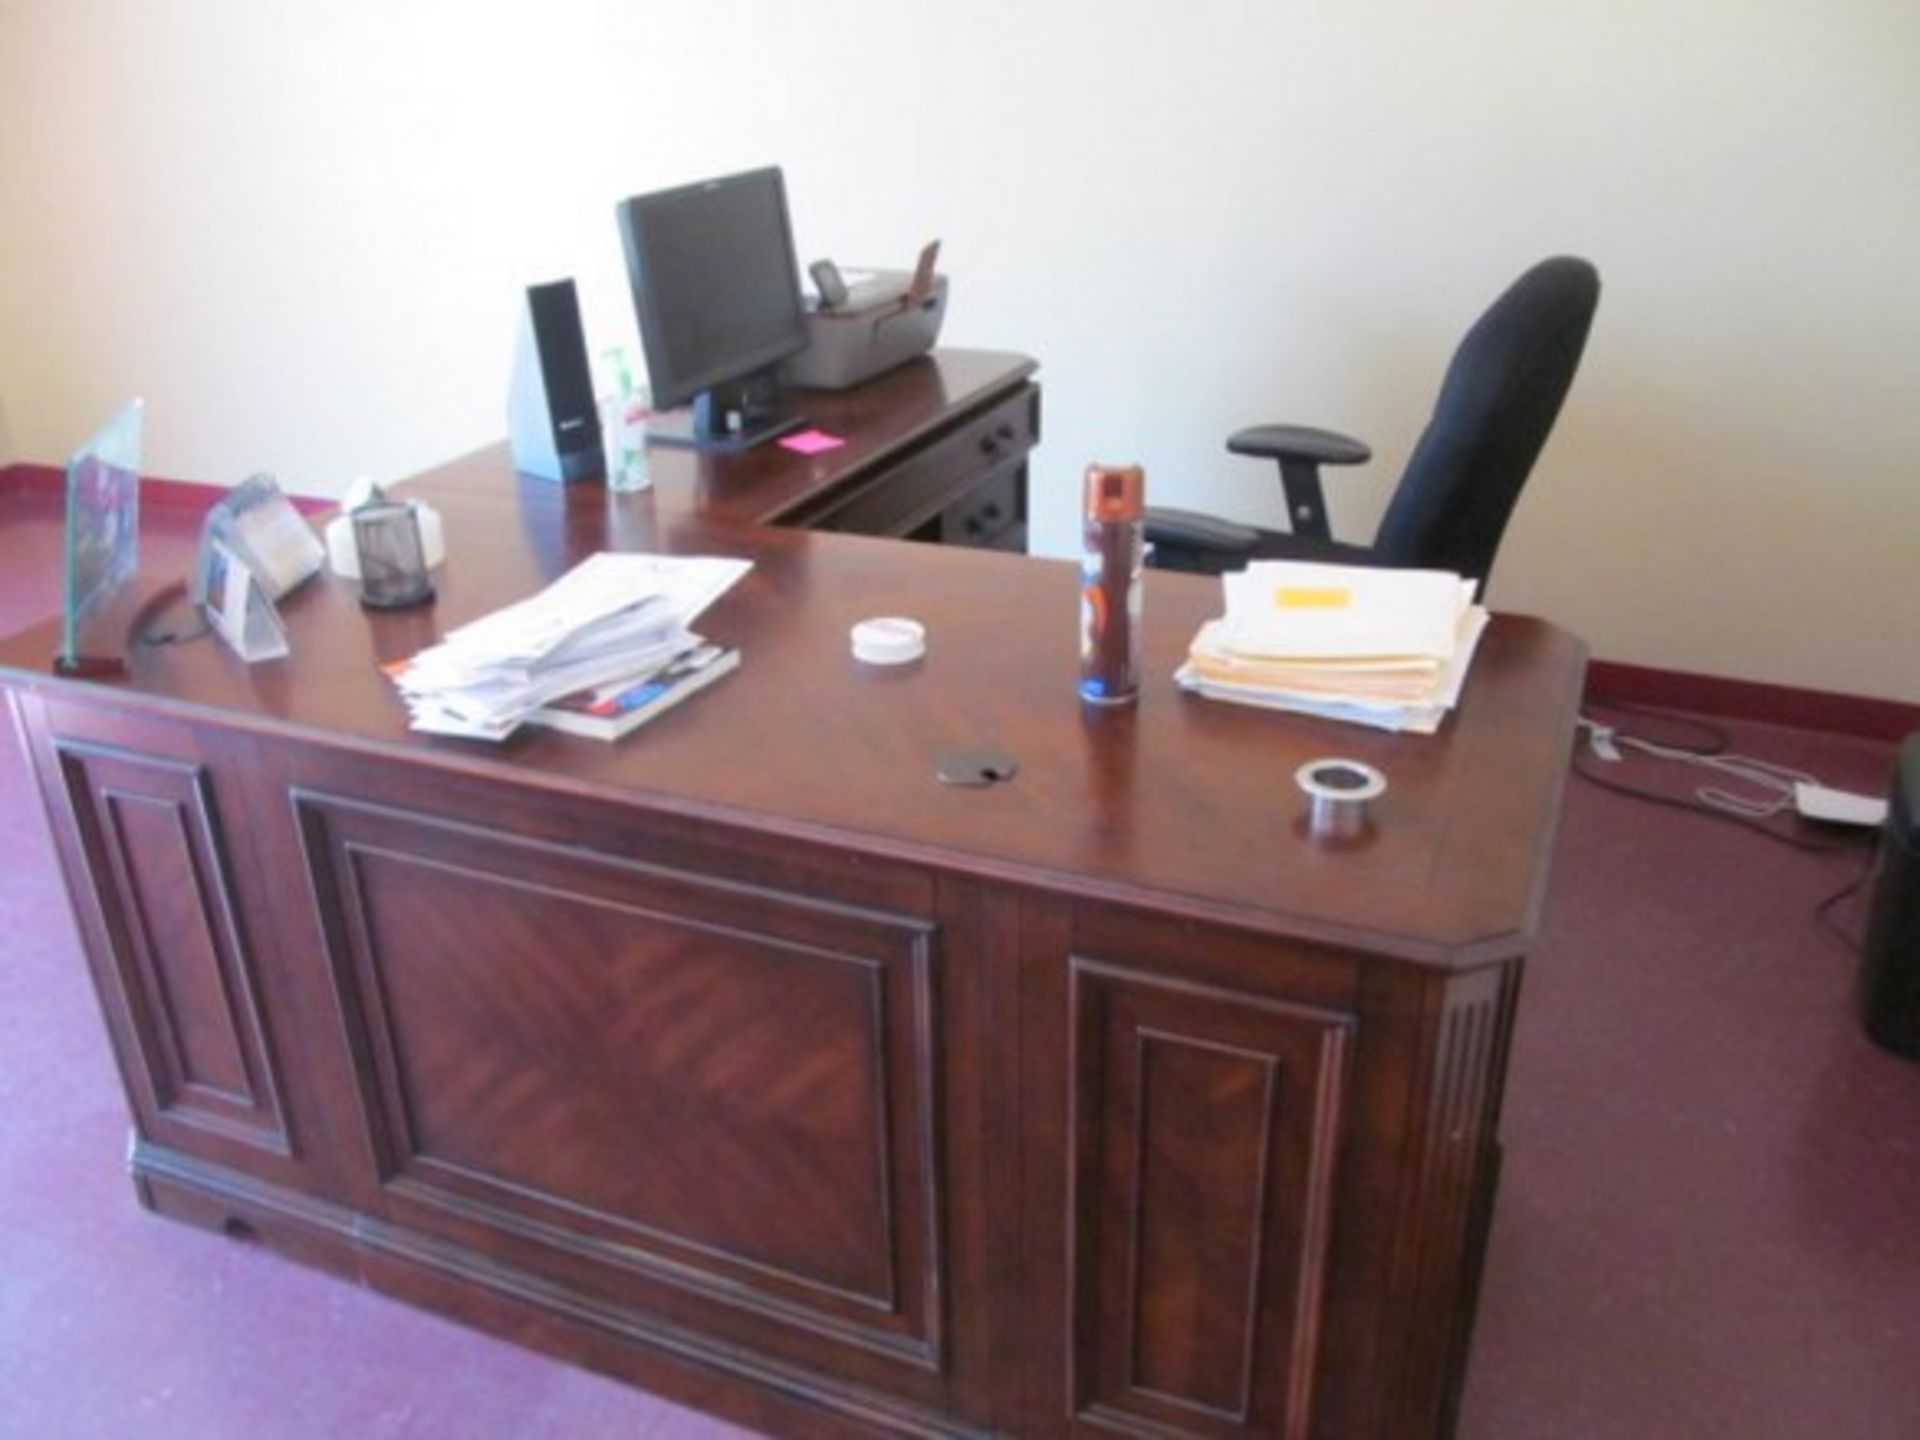 L-Shaped Executive Desk